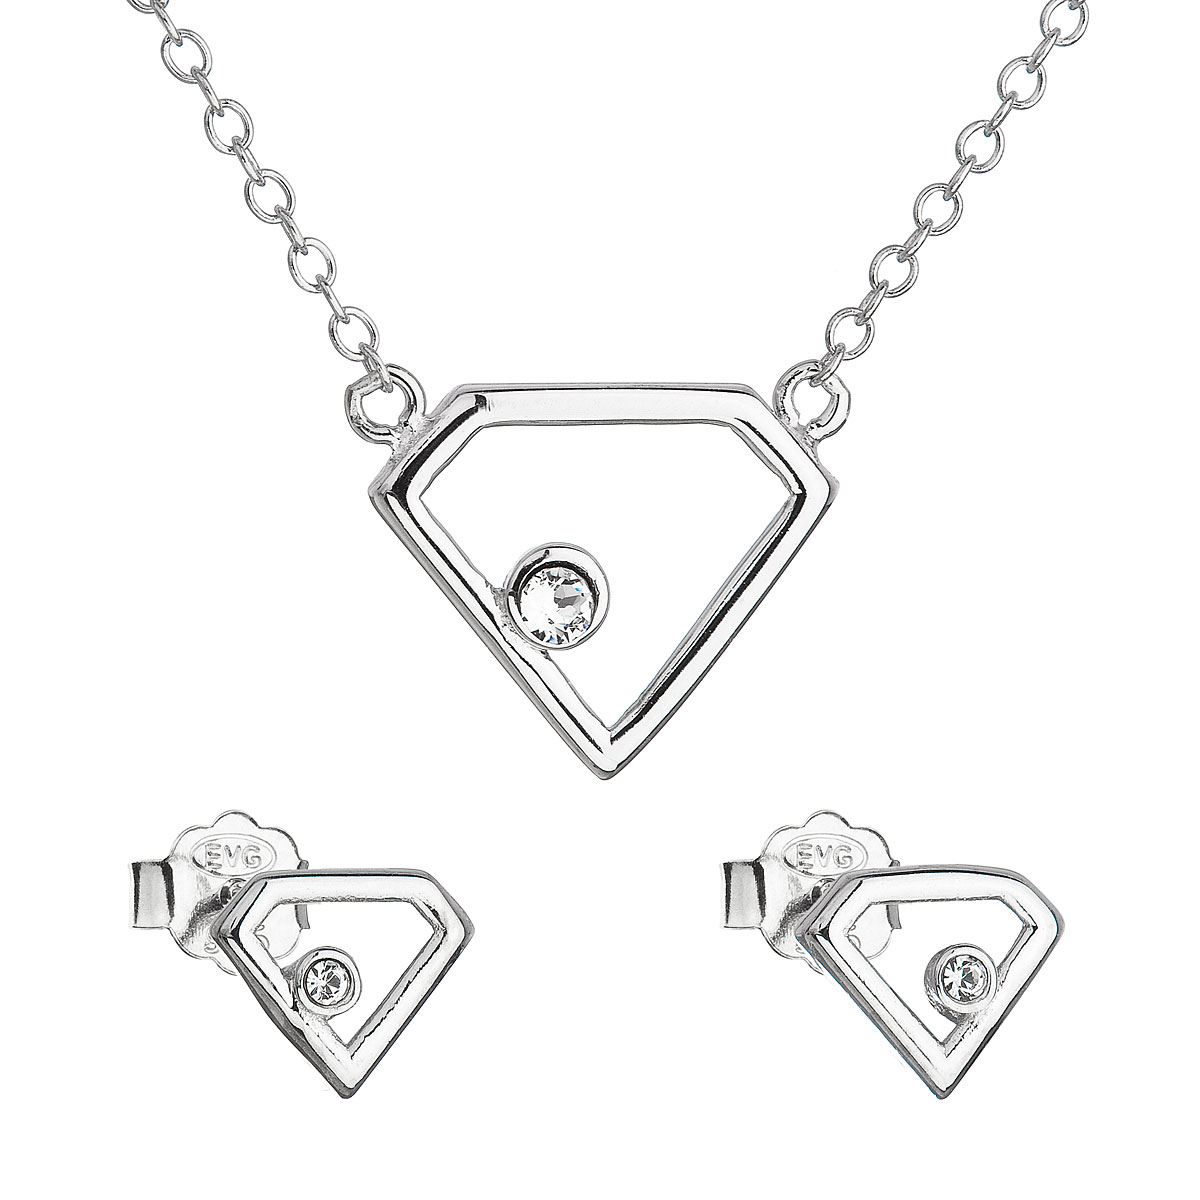 Evolution Group Sada šperků s krystaly Swarovski náušnice a náhrdelník bílý trojúhelník 39165.1